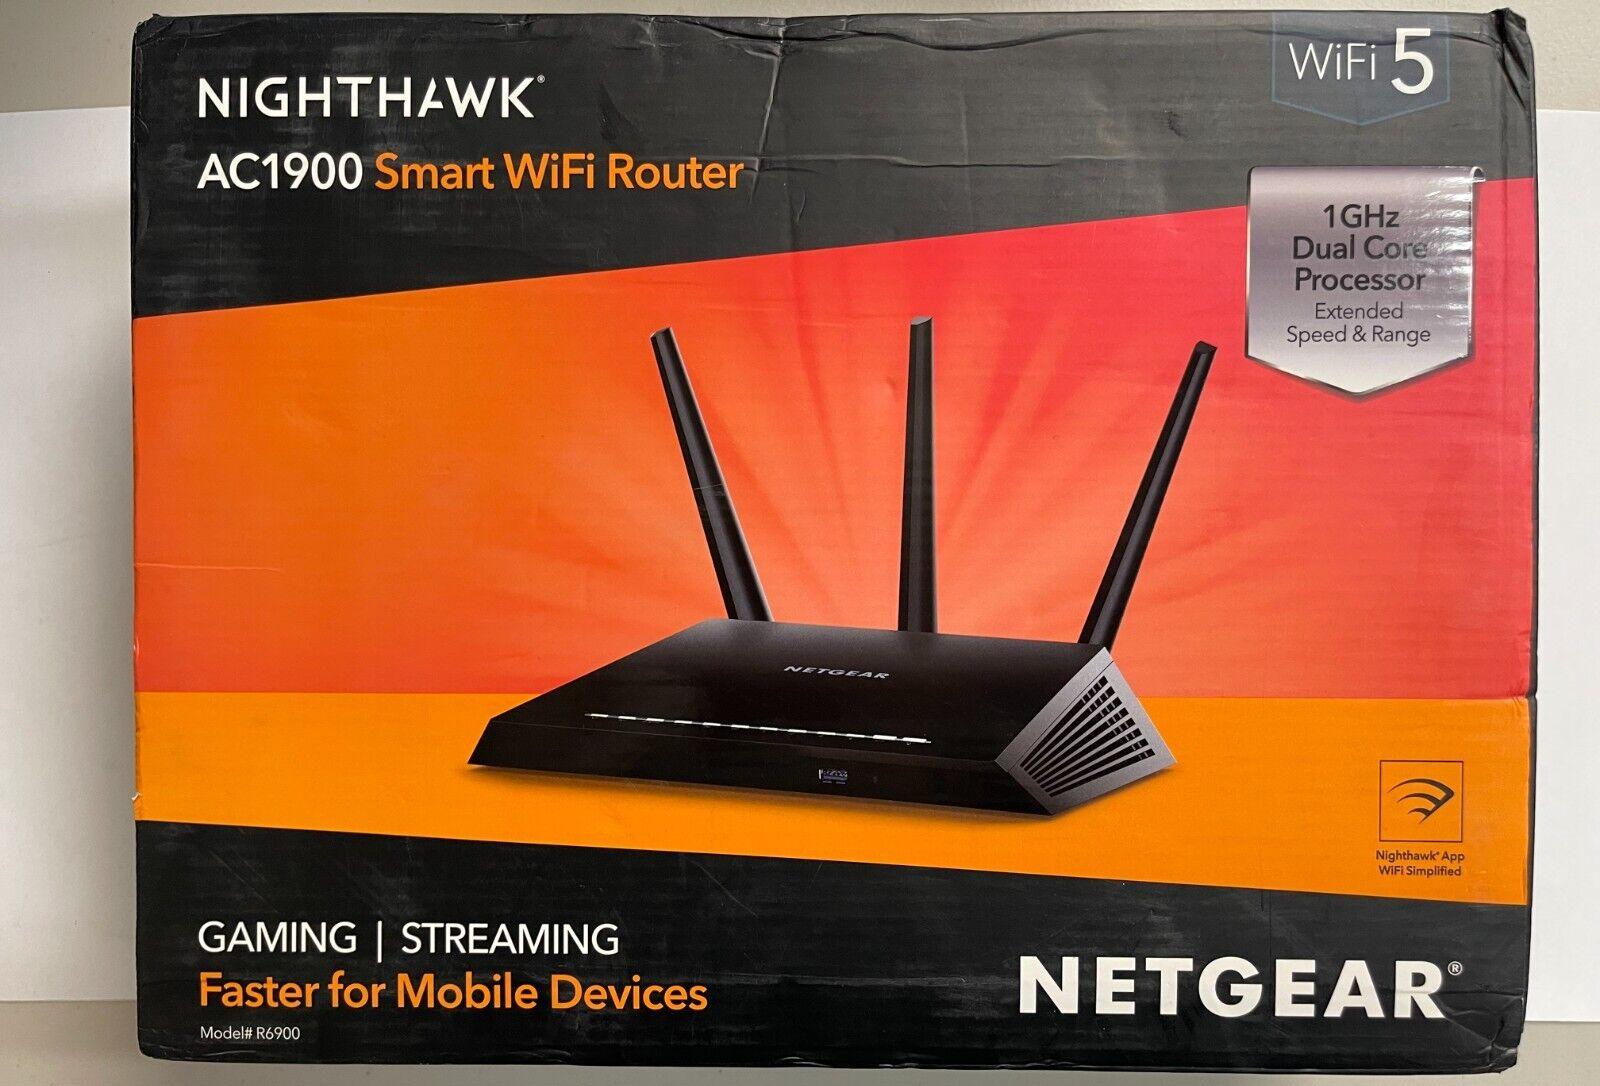 NETGEAR R6900 Smart WiFi Router 1 GHZ Dual Core Processor Extended Speed & Rang